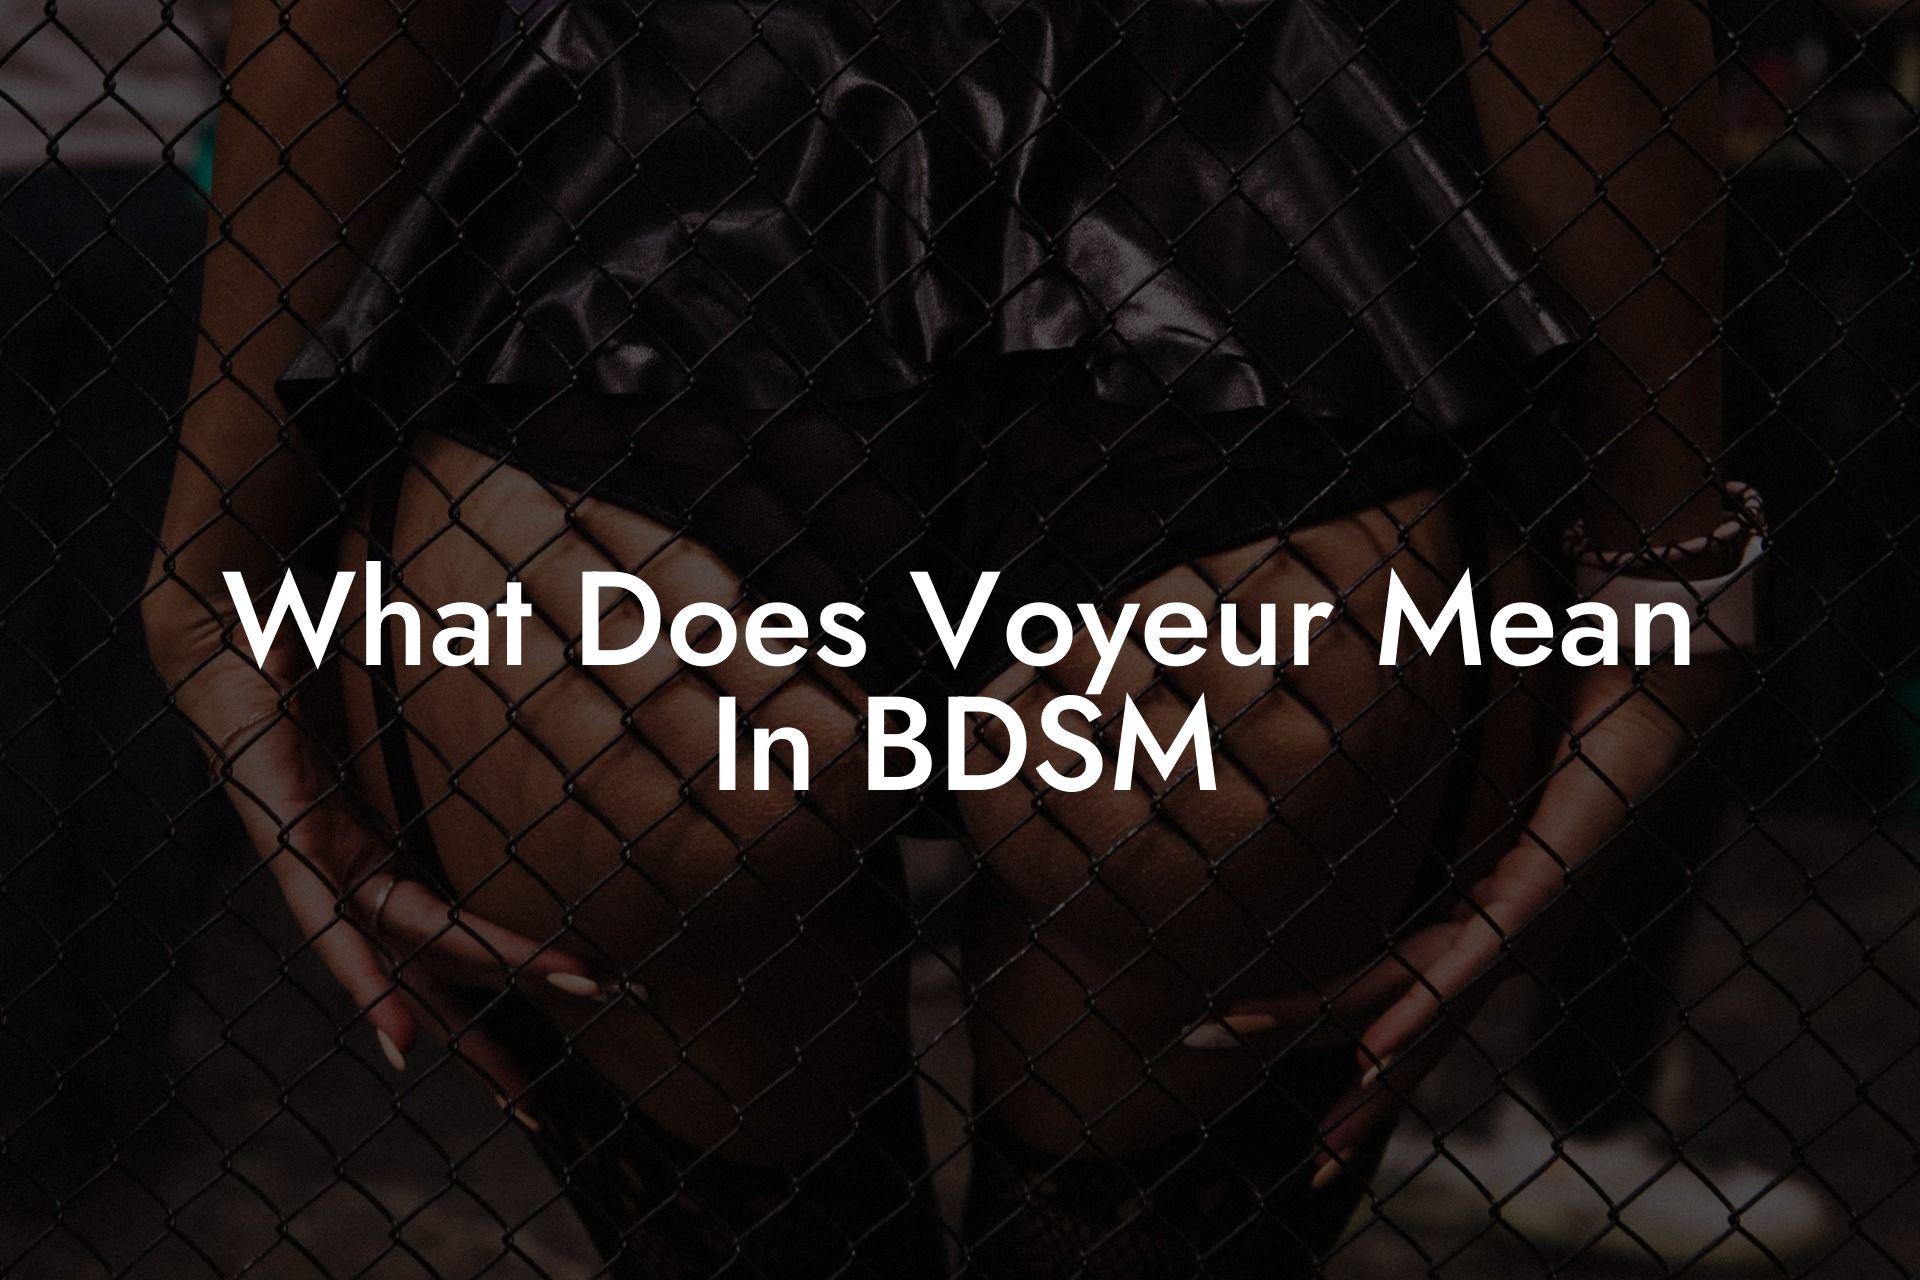 What Does Voyeur Mean In BDSM